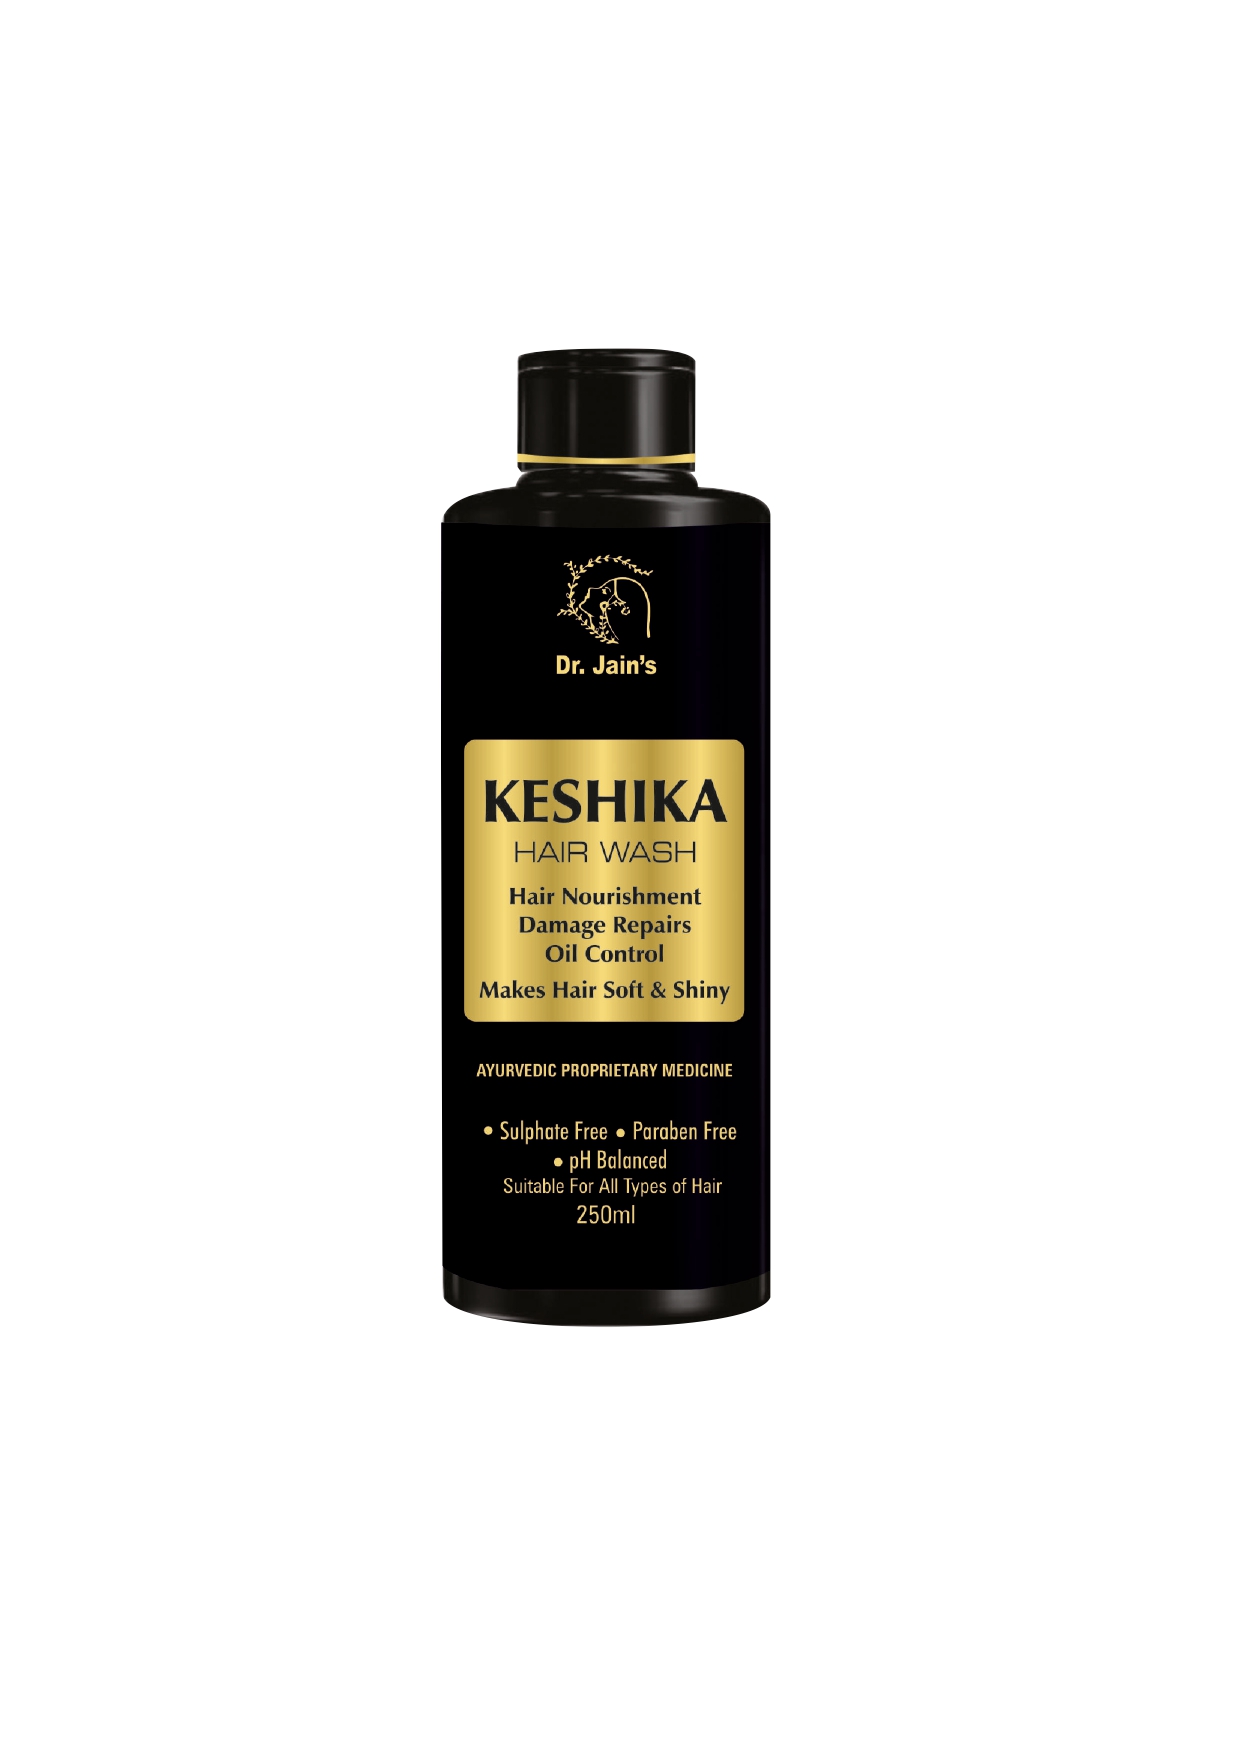 Keshika Hair Wash Shampoo, Hair Nourishment, Damage Repairs, Oil Control 250ml